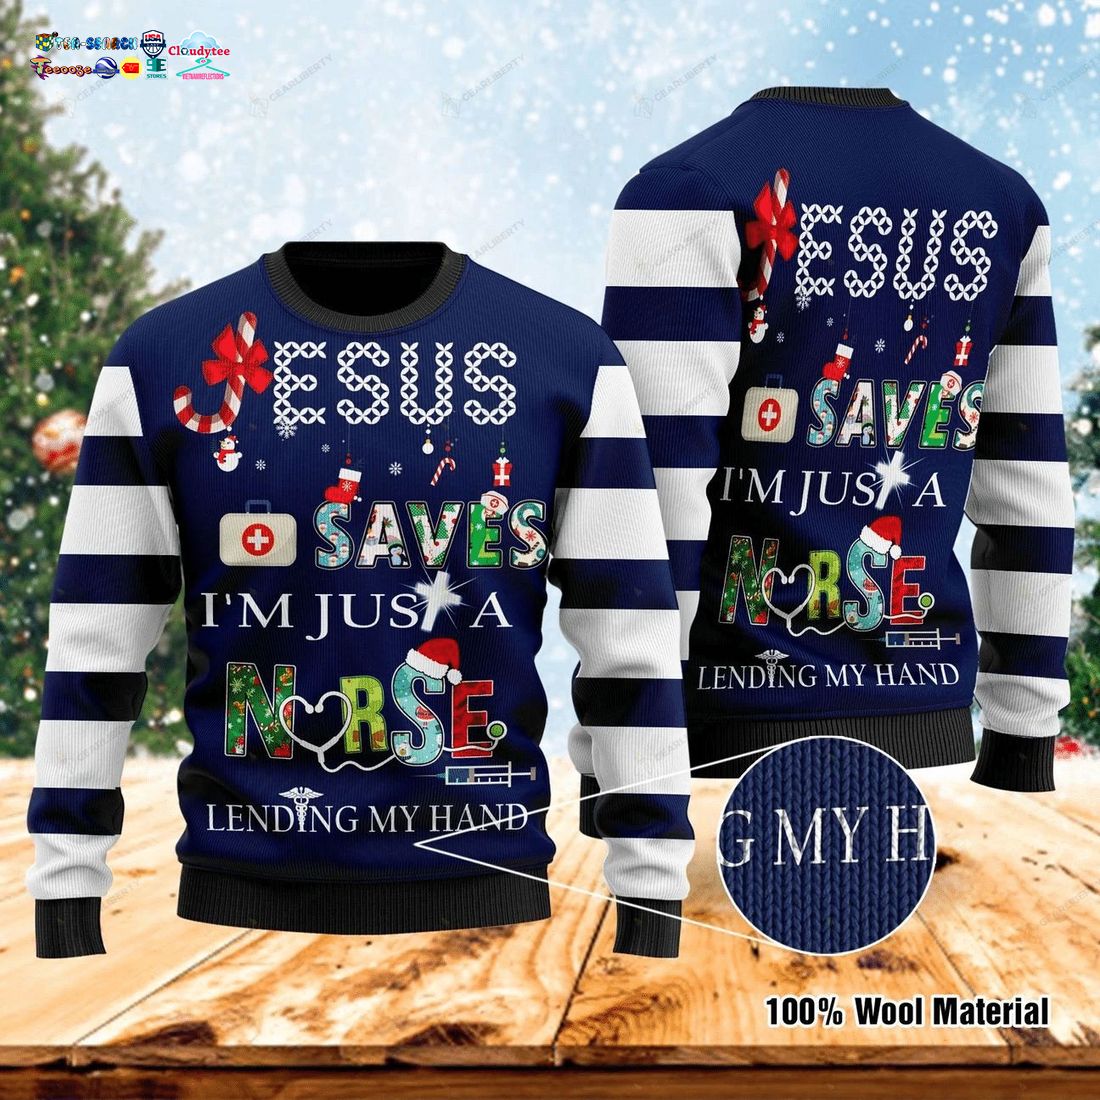 Jesus Saves I'm Just A Nurse Lending My Hand Ugly Christmas Sweater